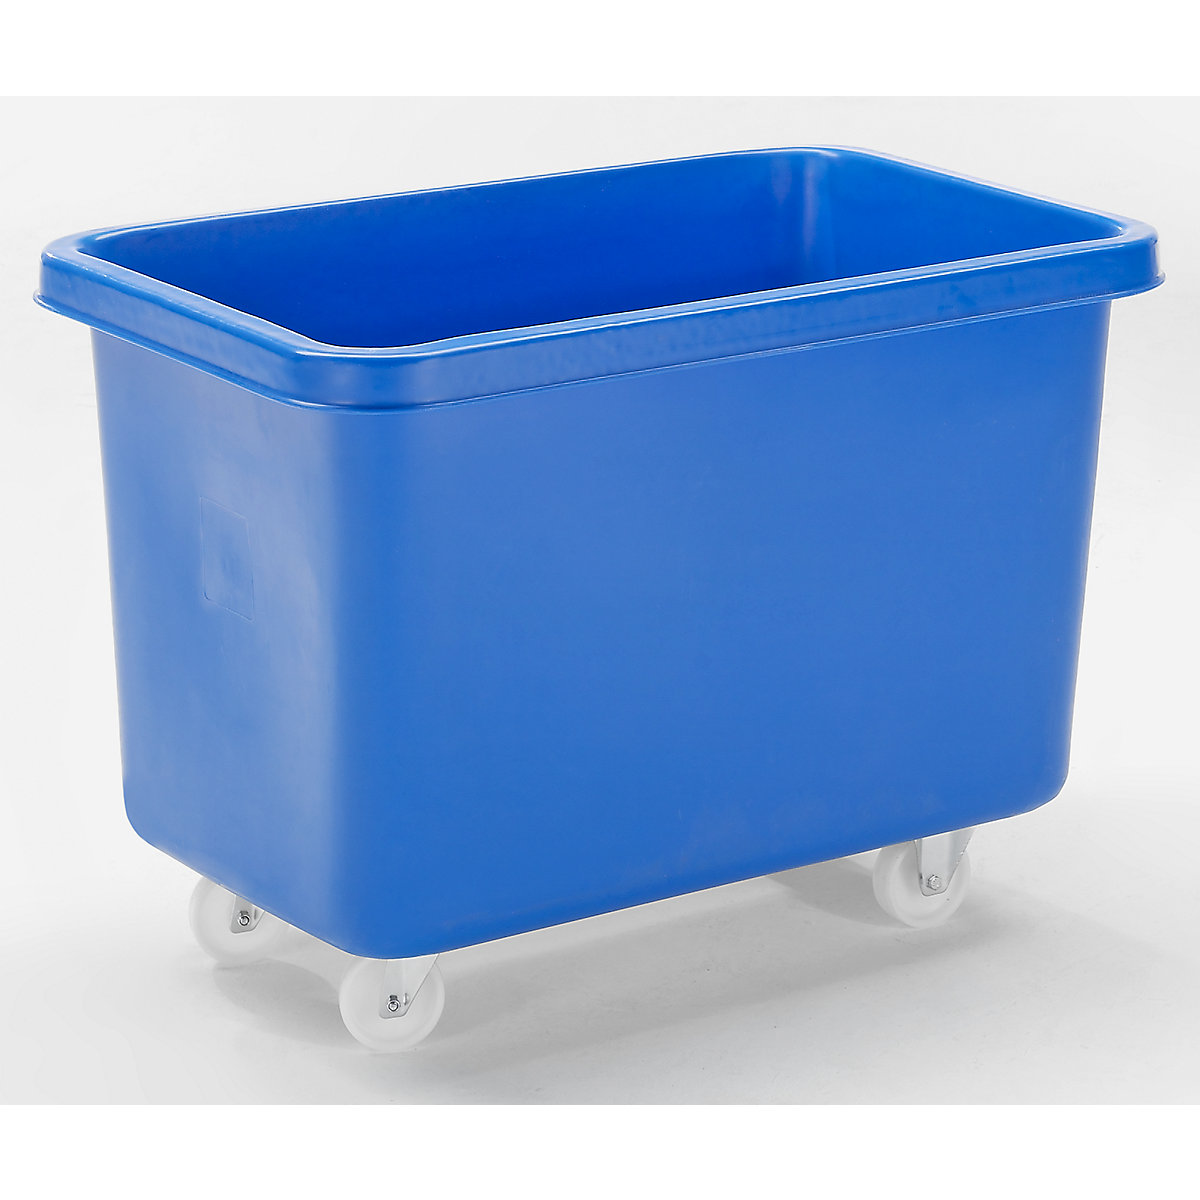 Rechteckbehälter aus Polyethylen, fahrbar, Inhalt 340 l, blau, ab 5 Stk-4